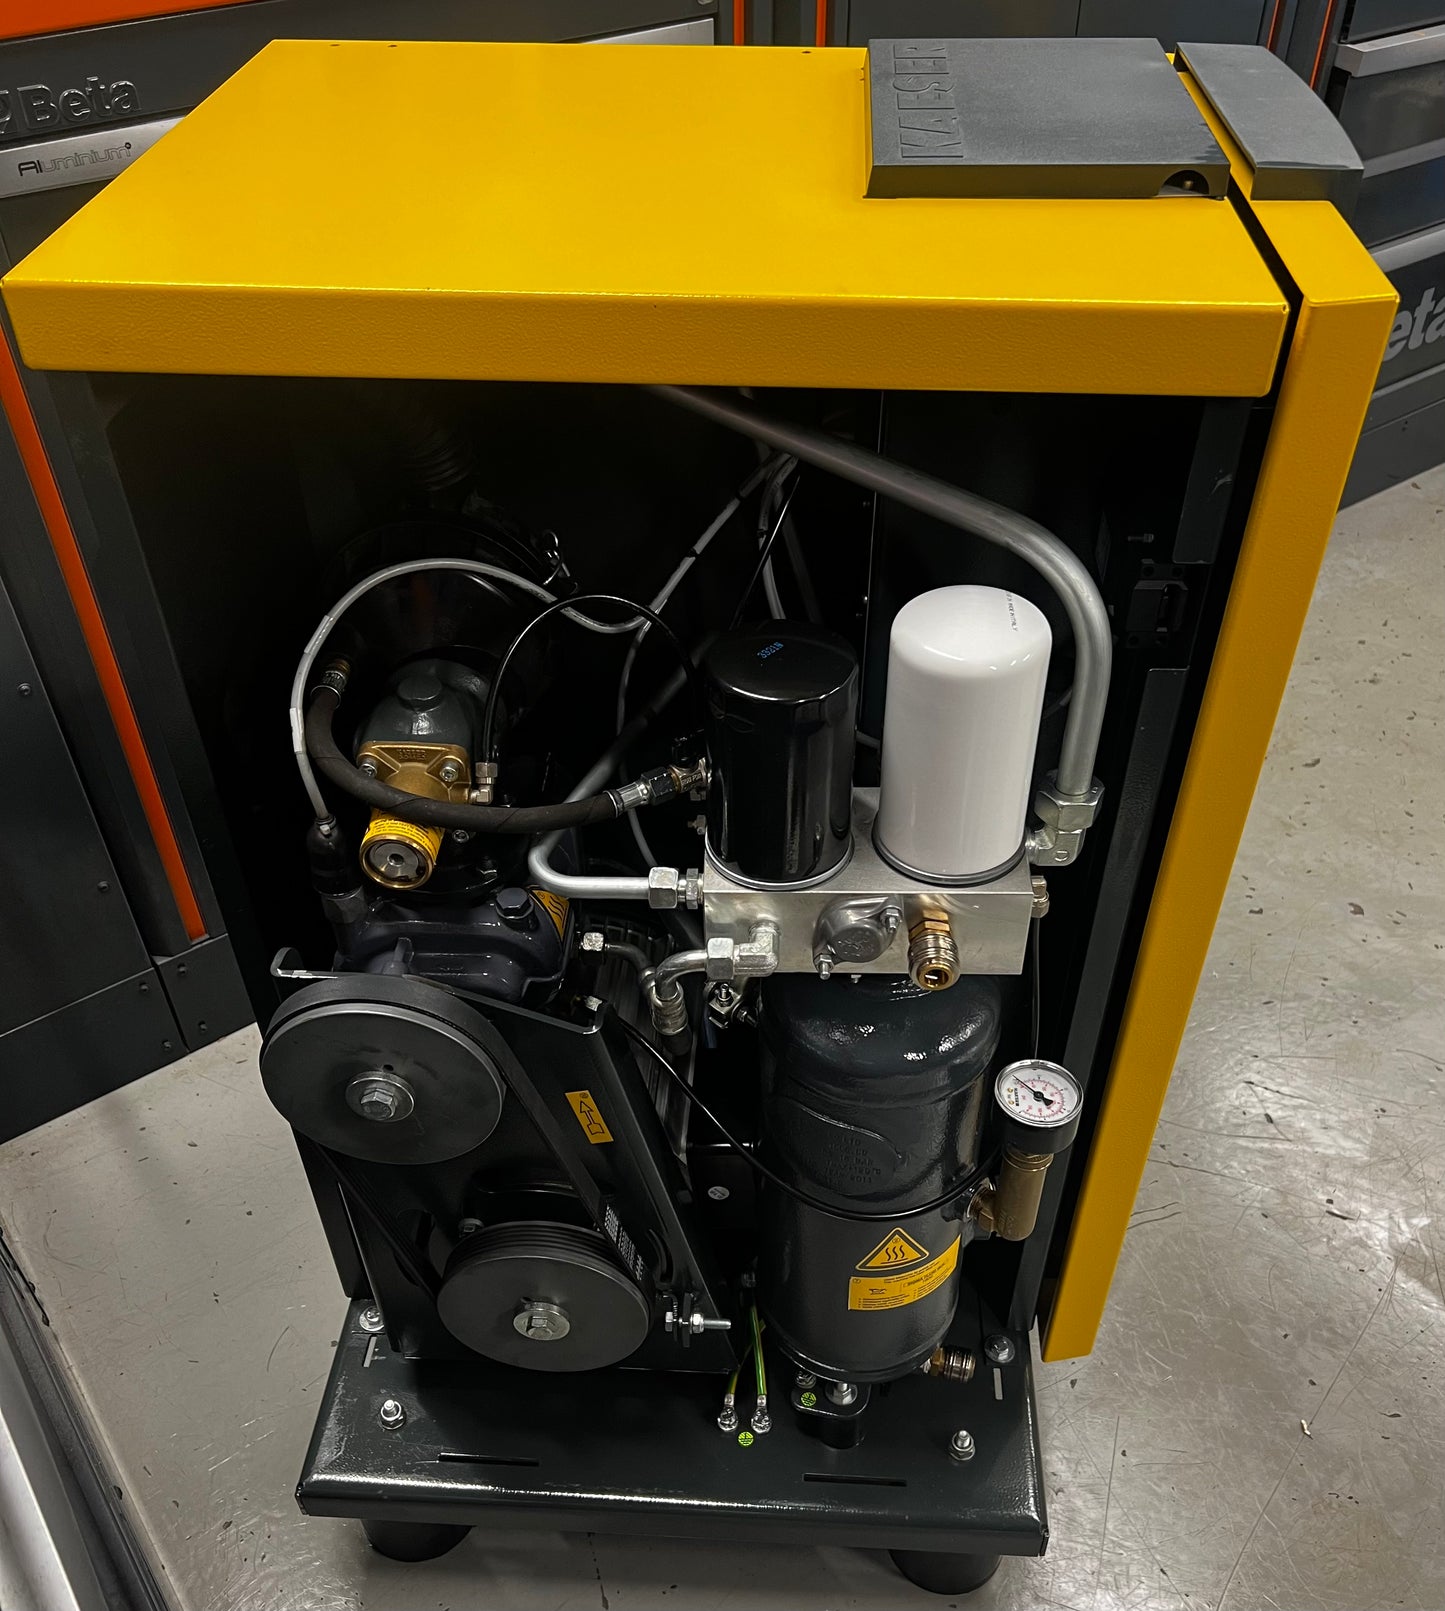 HPC / Kaeser SX6 Rotary Screw Compressor (4.0Kw, 17CFM, 11Bar, 159psi)